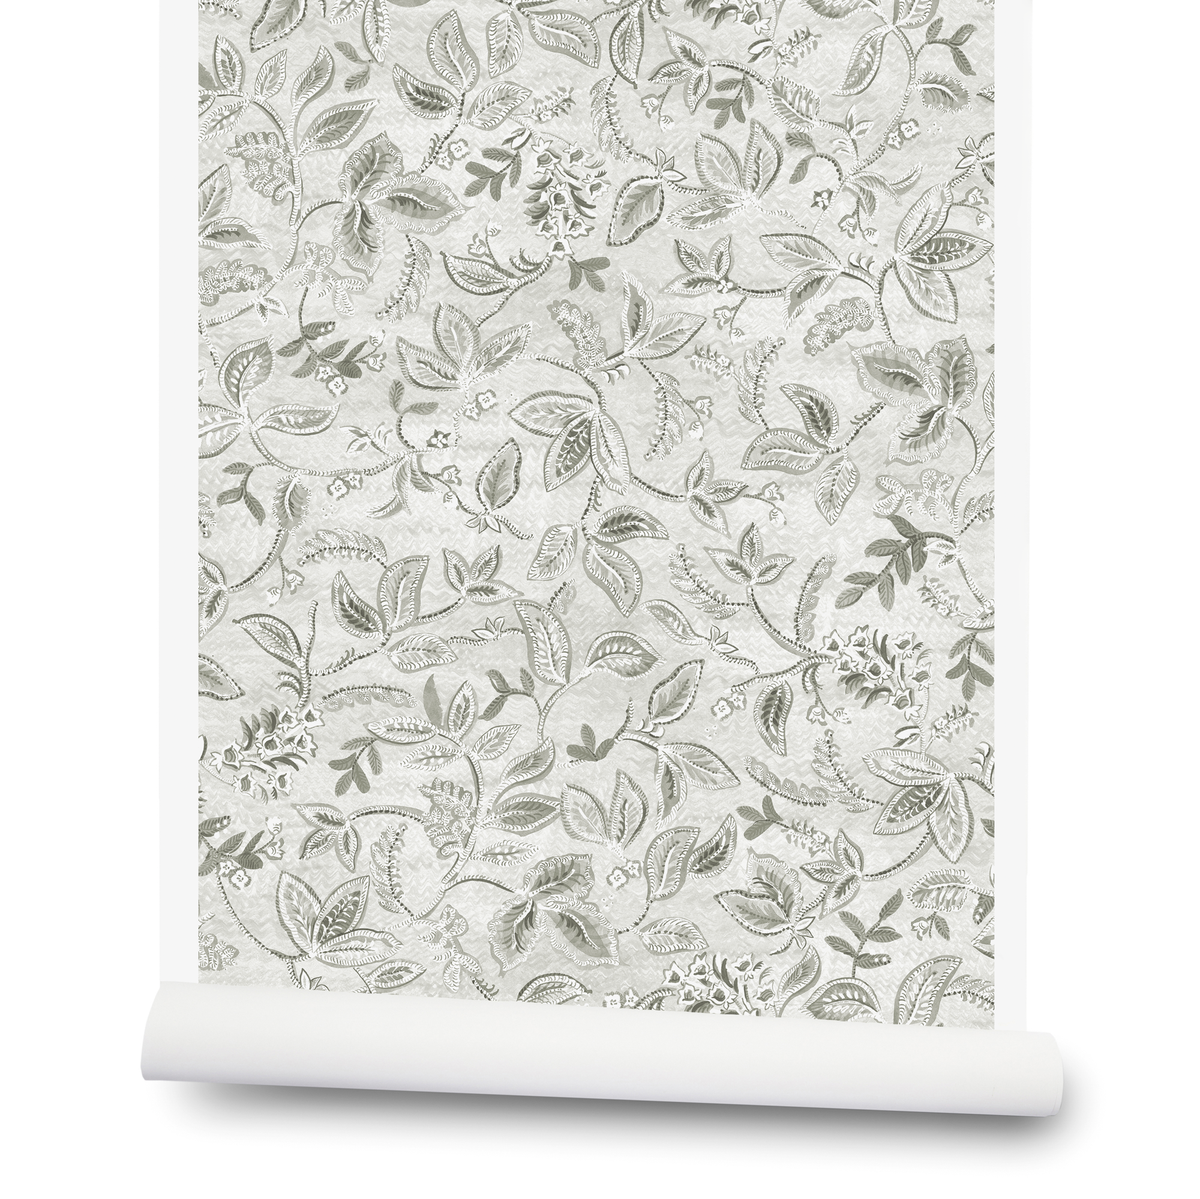 Textured Botanical Wallpaper in Gray